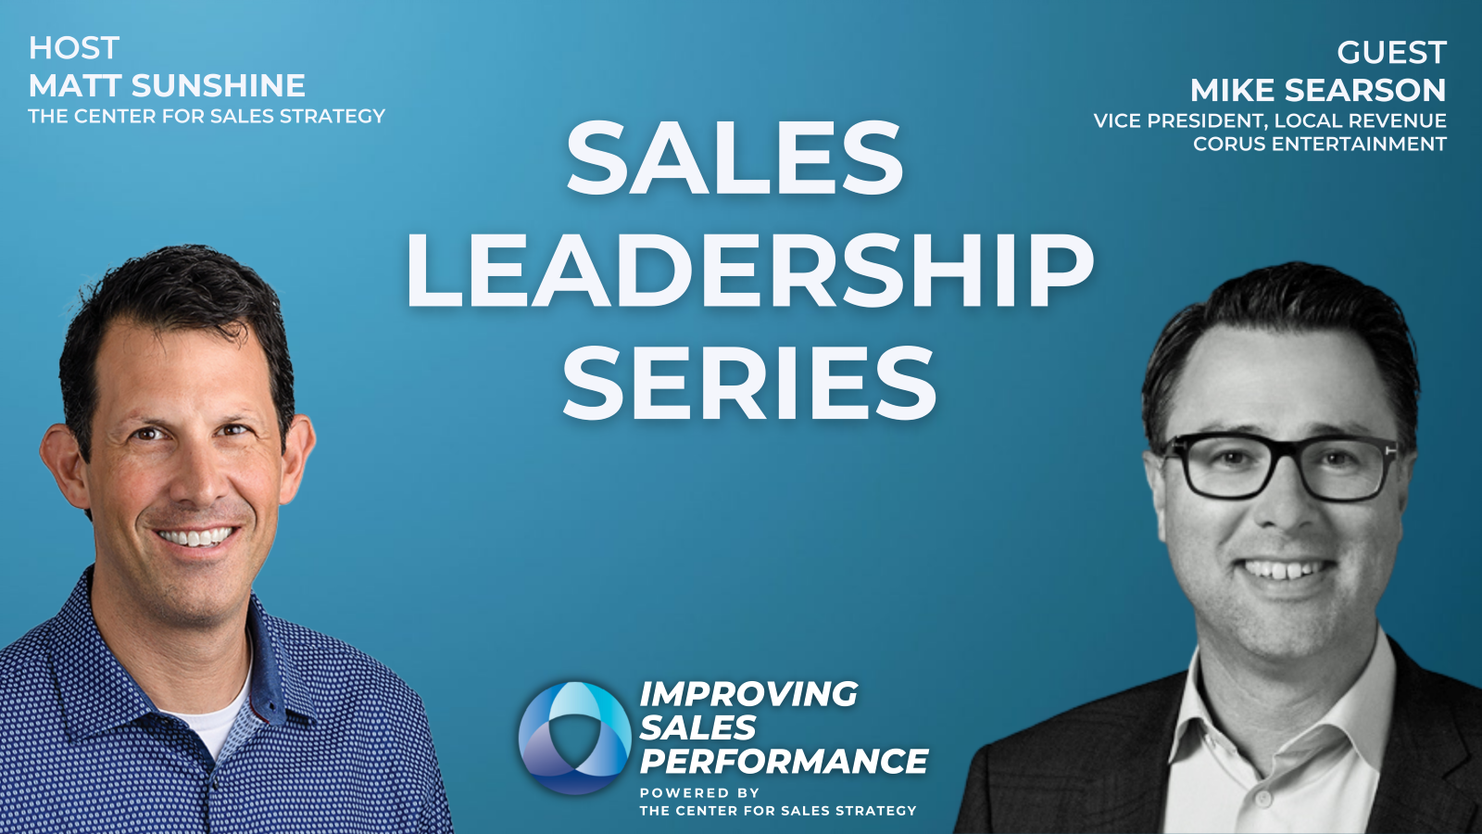 Sales Leadership Series: Mike Searson | Vice President, Local Revenue at Corus Entertainment